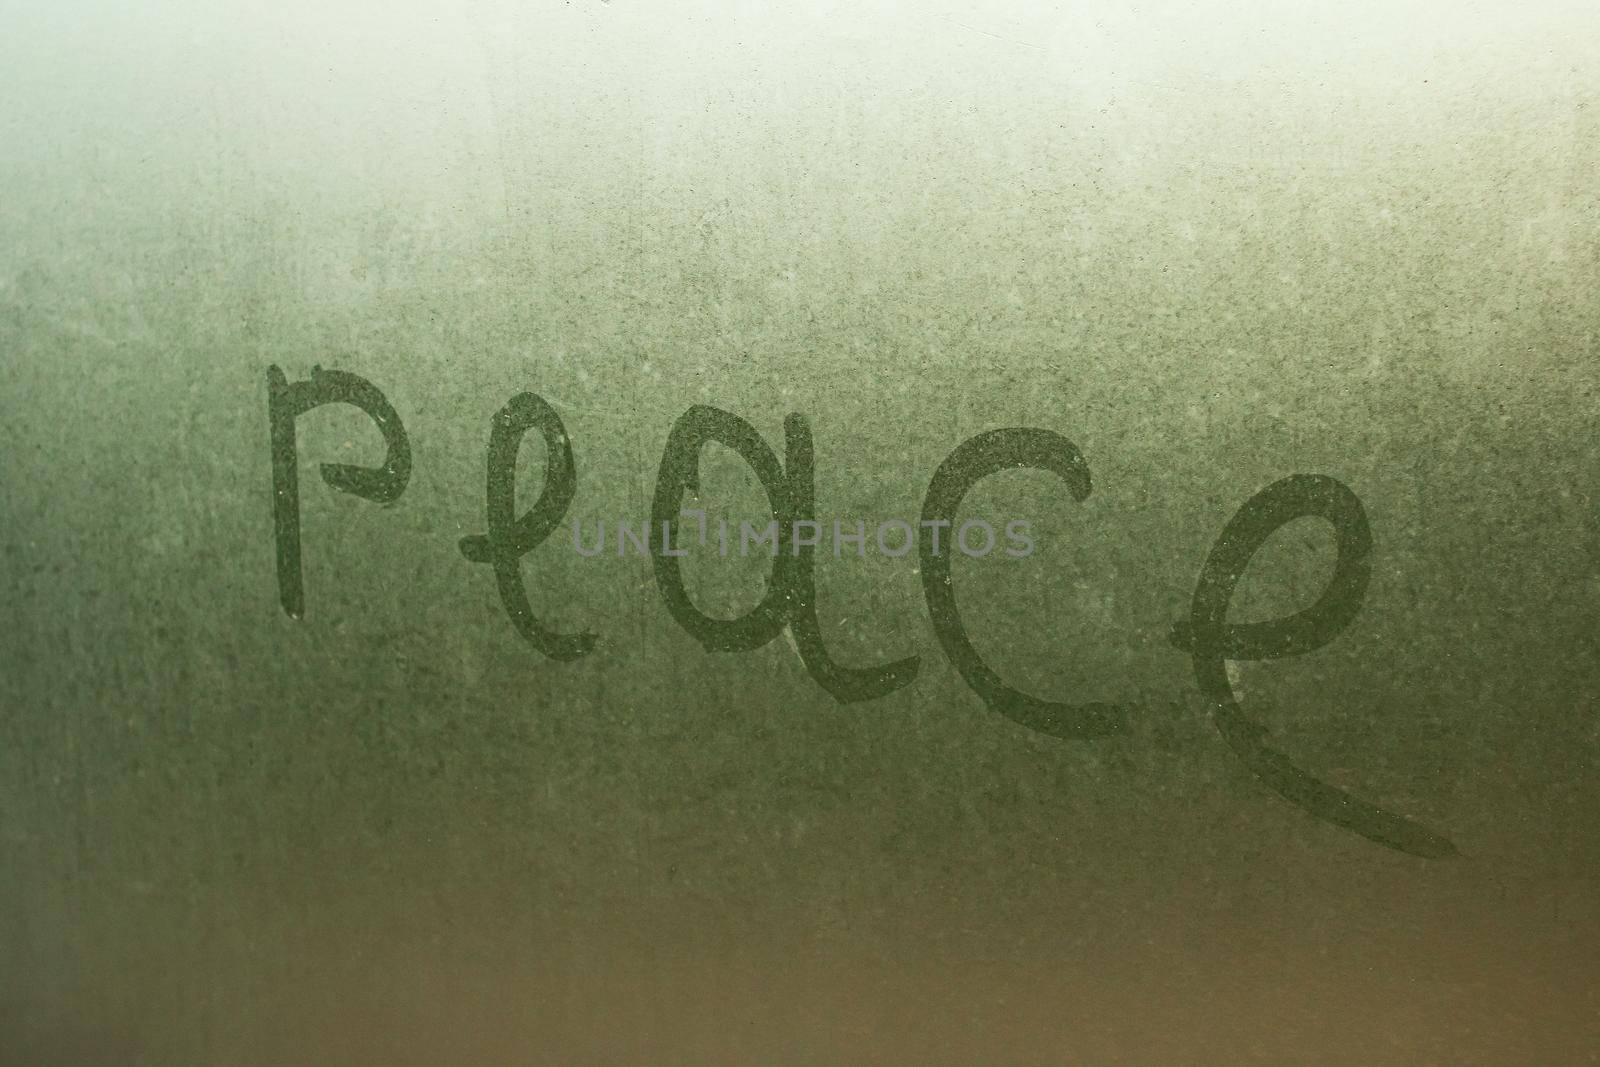 Inscription peace on a wet glass closeup by Vera1703